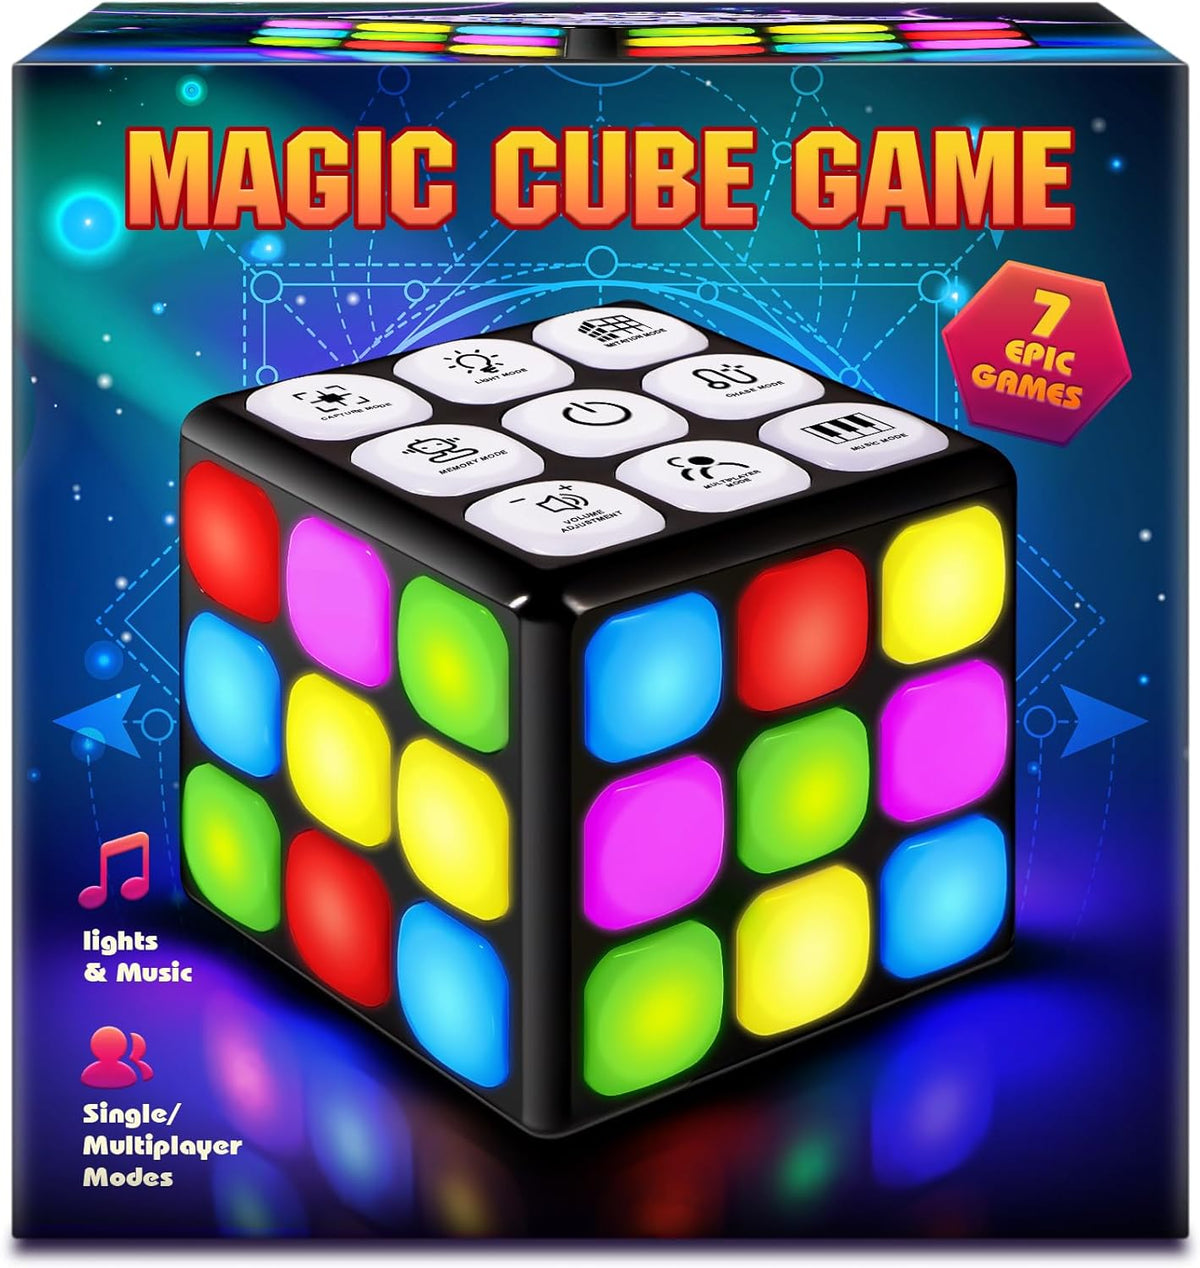 Flashing Cube Handheld Games - 7 Fun Brain & Memory Games - Cykapu